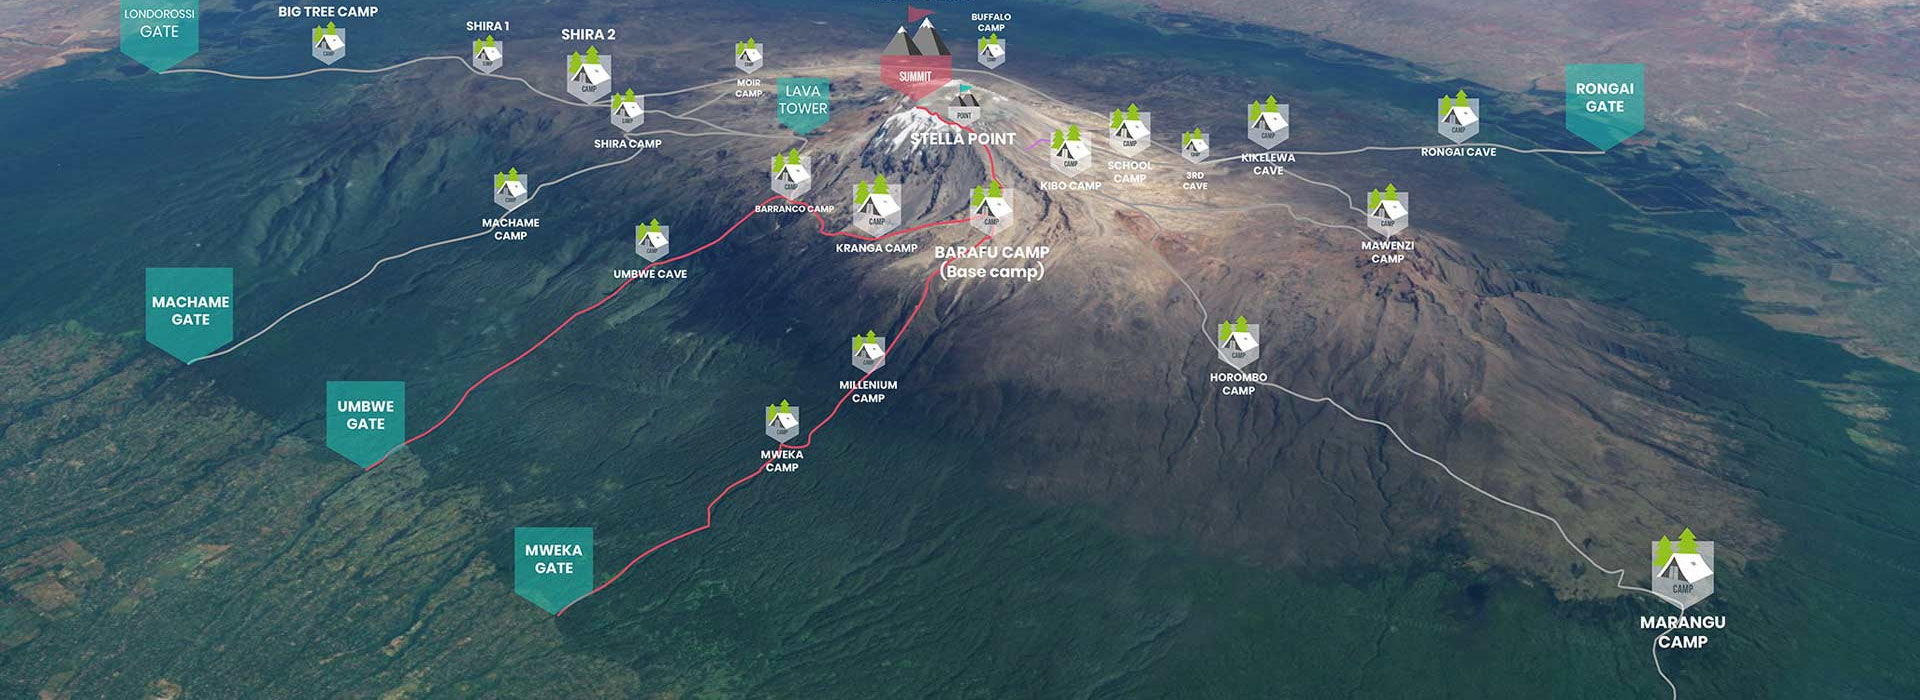 Kilimanjaro Map